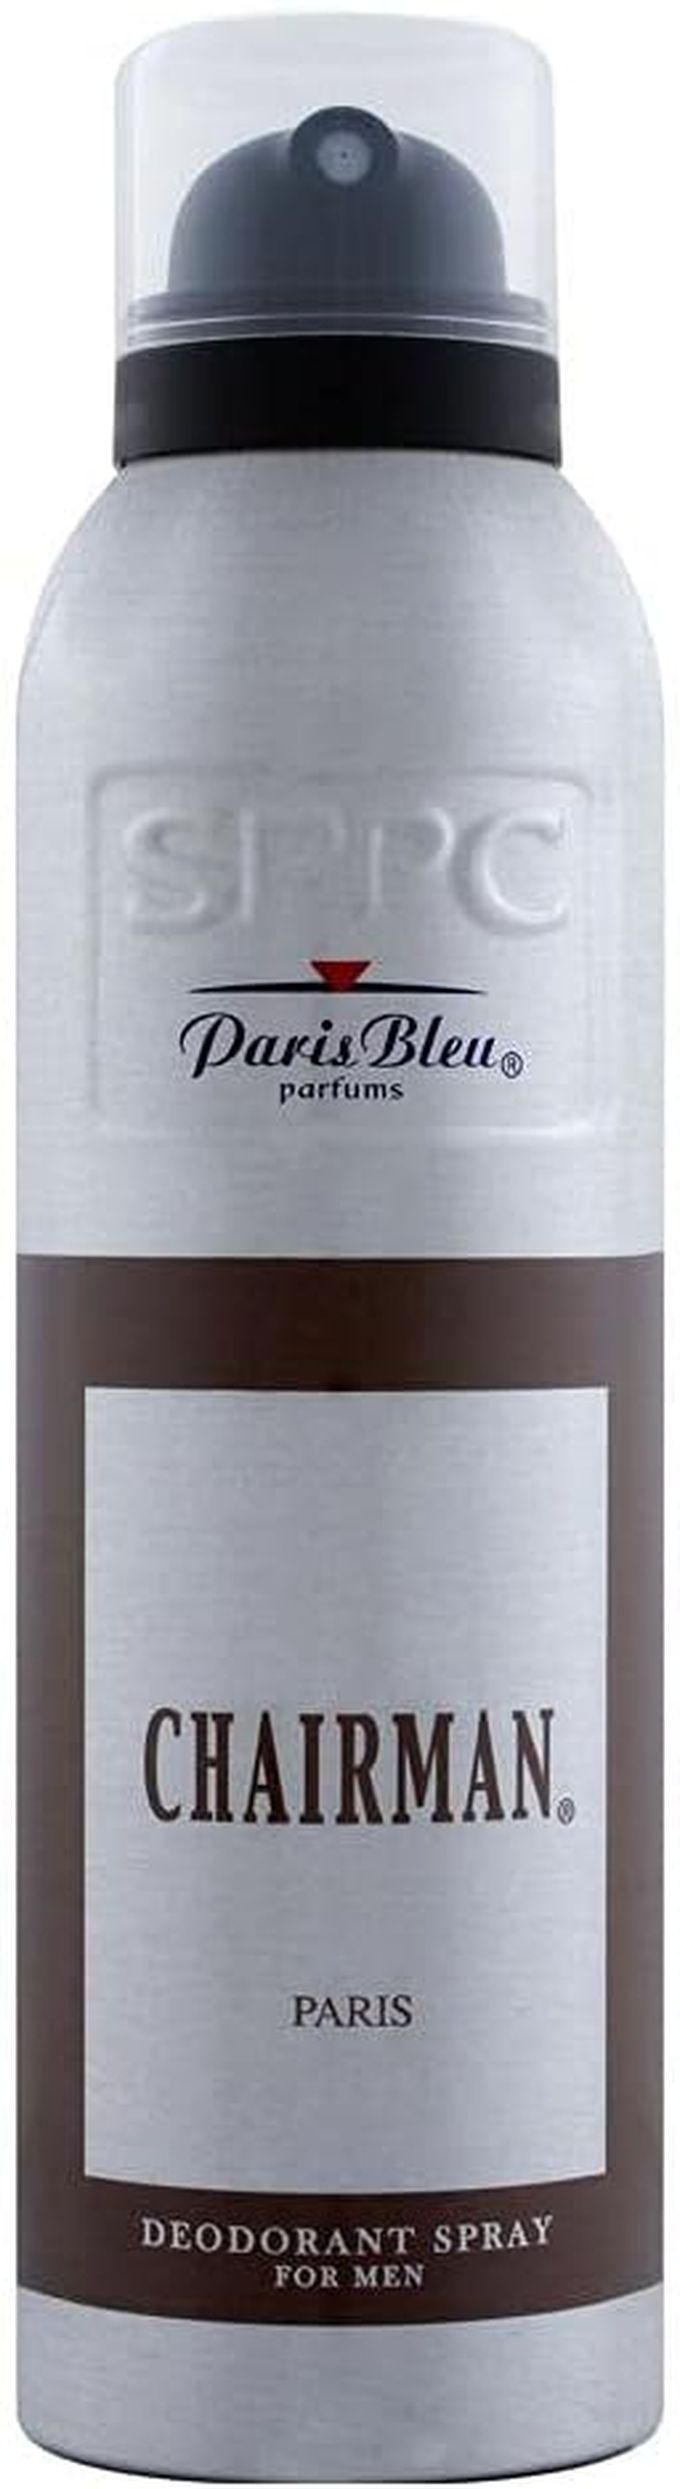 Paris Bleu Chairman Deodorant Spray For Men - 200ml